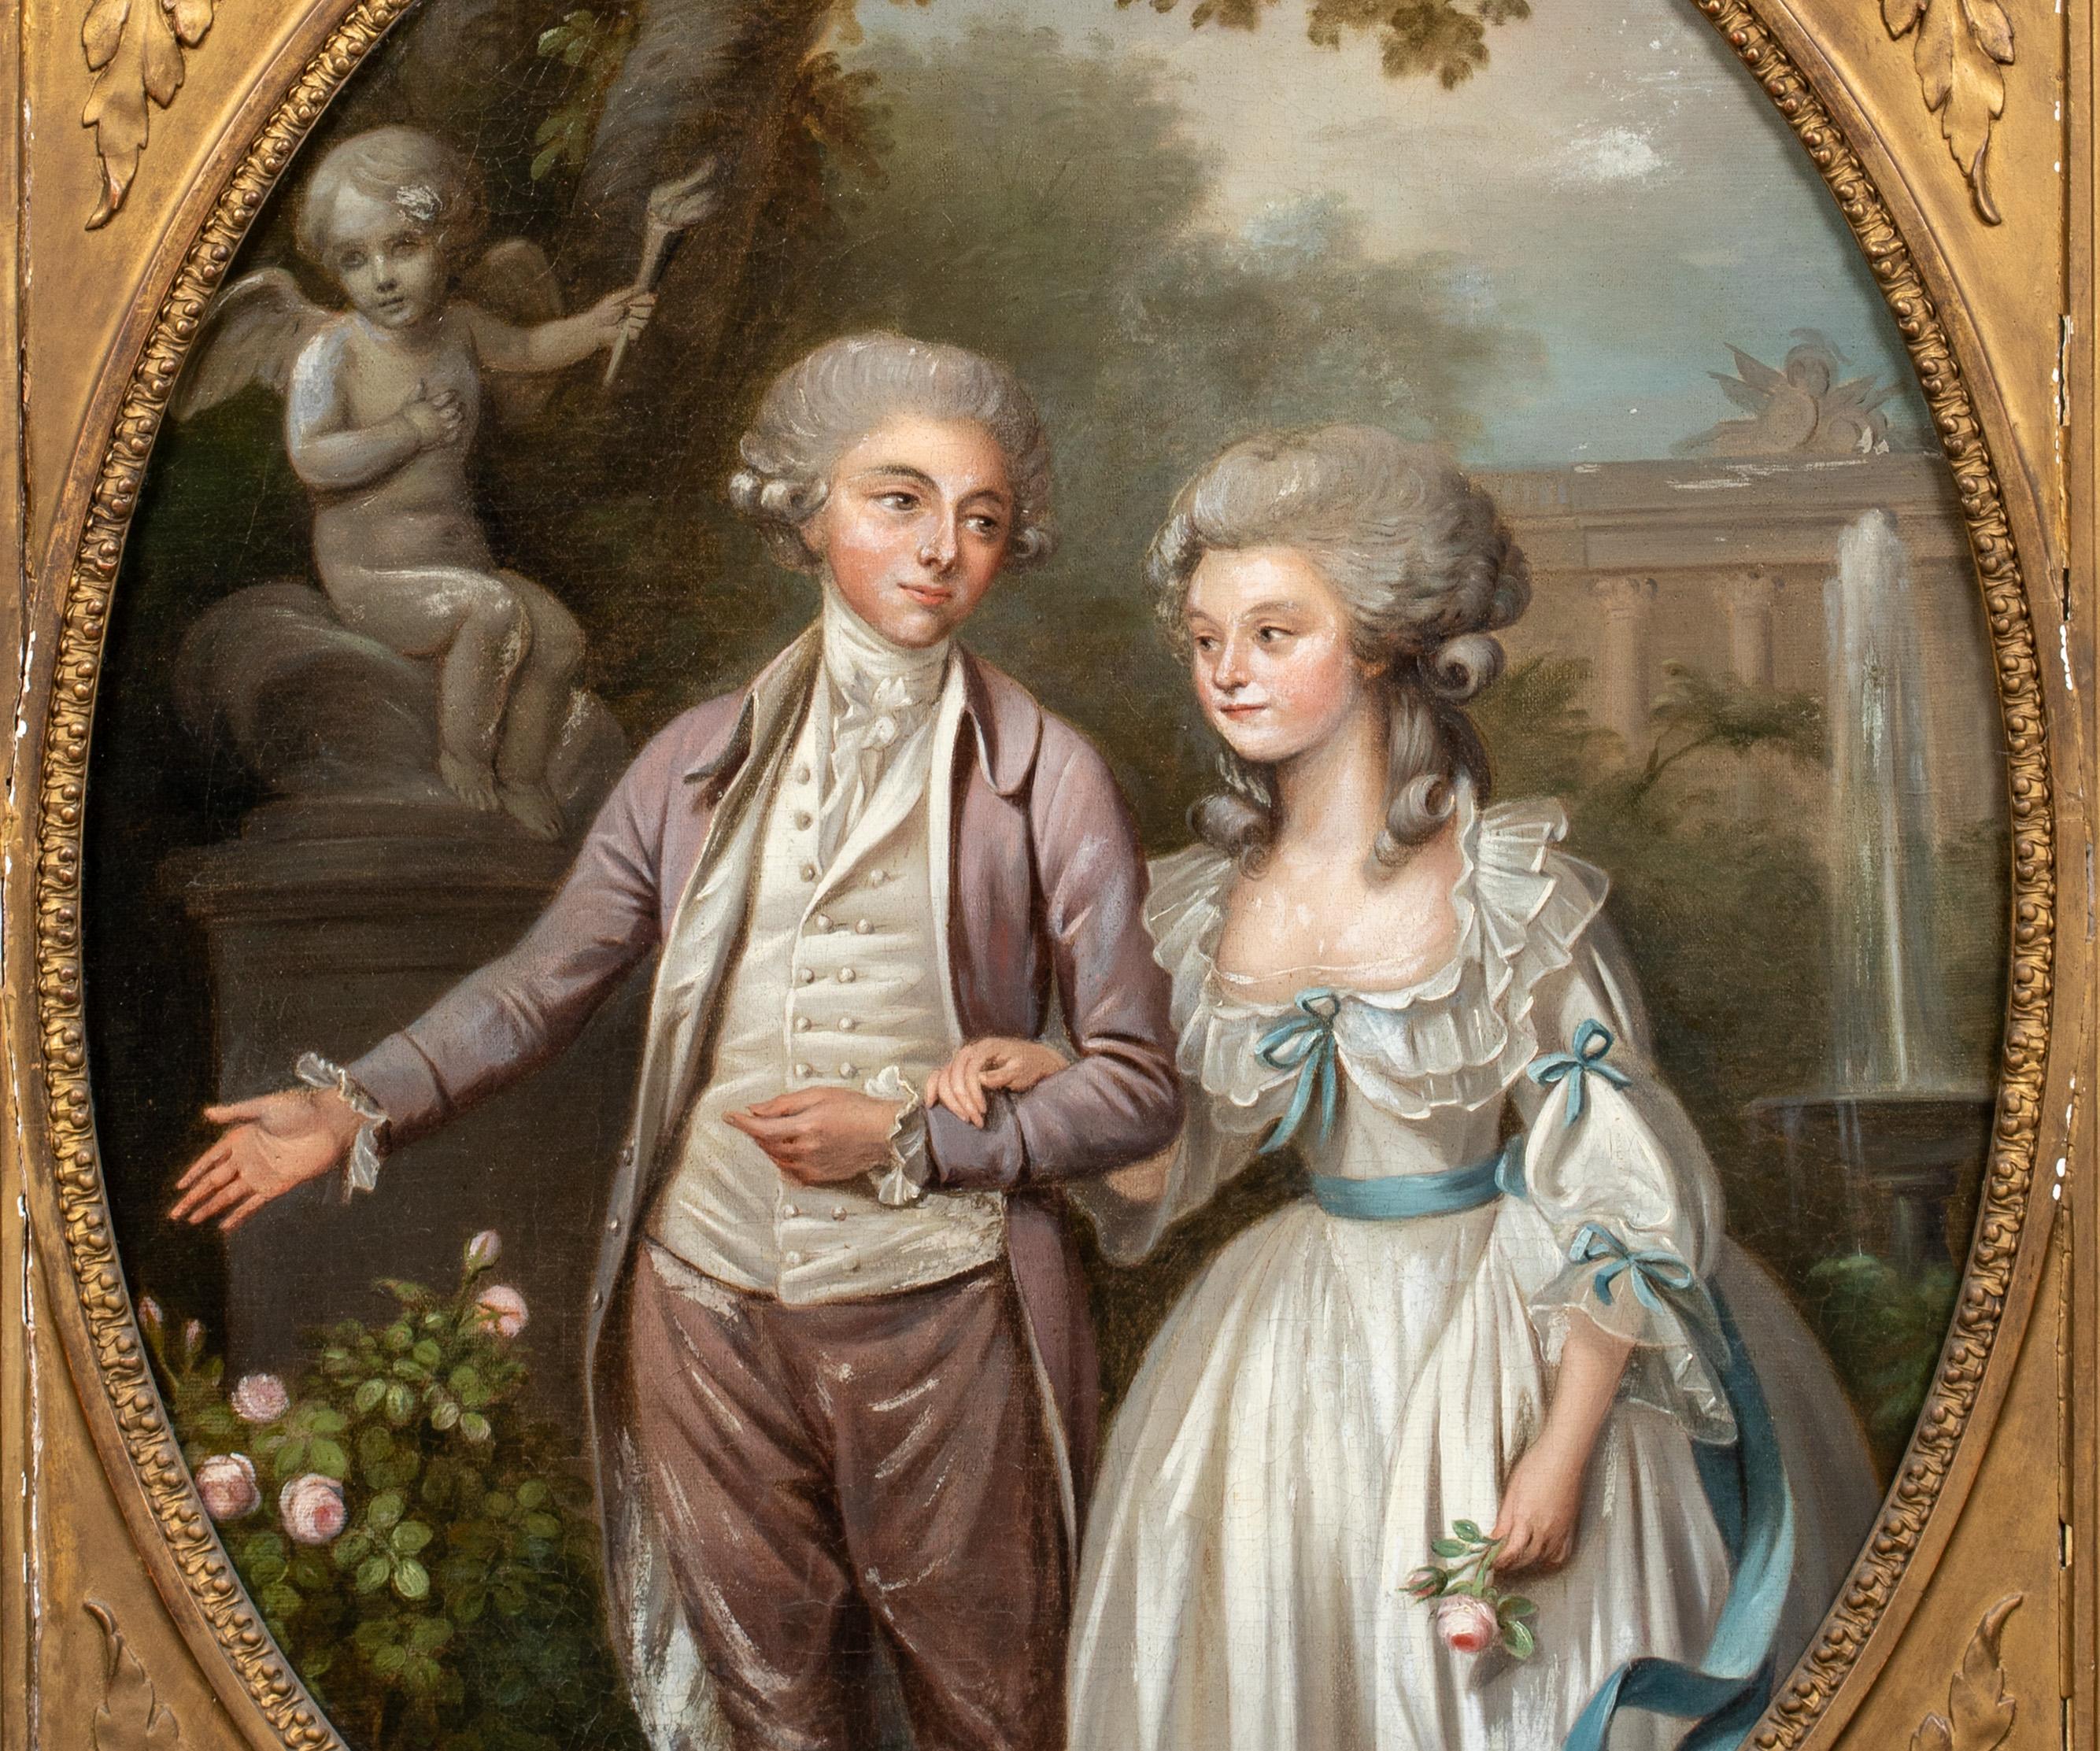 18th century lovers